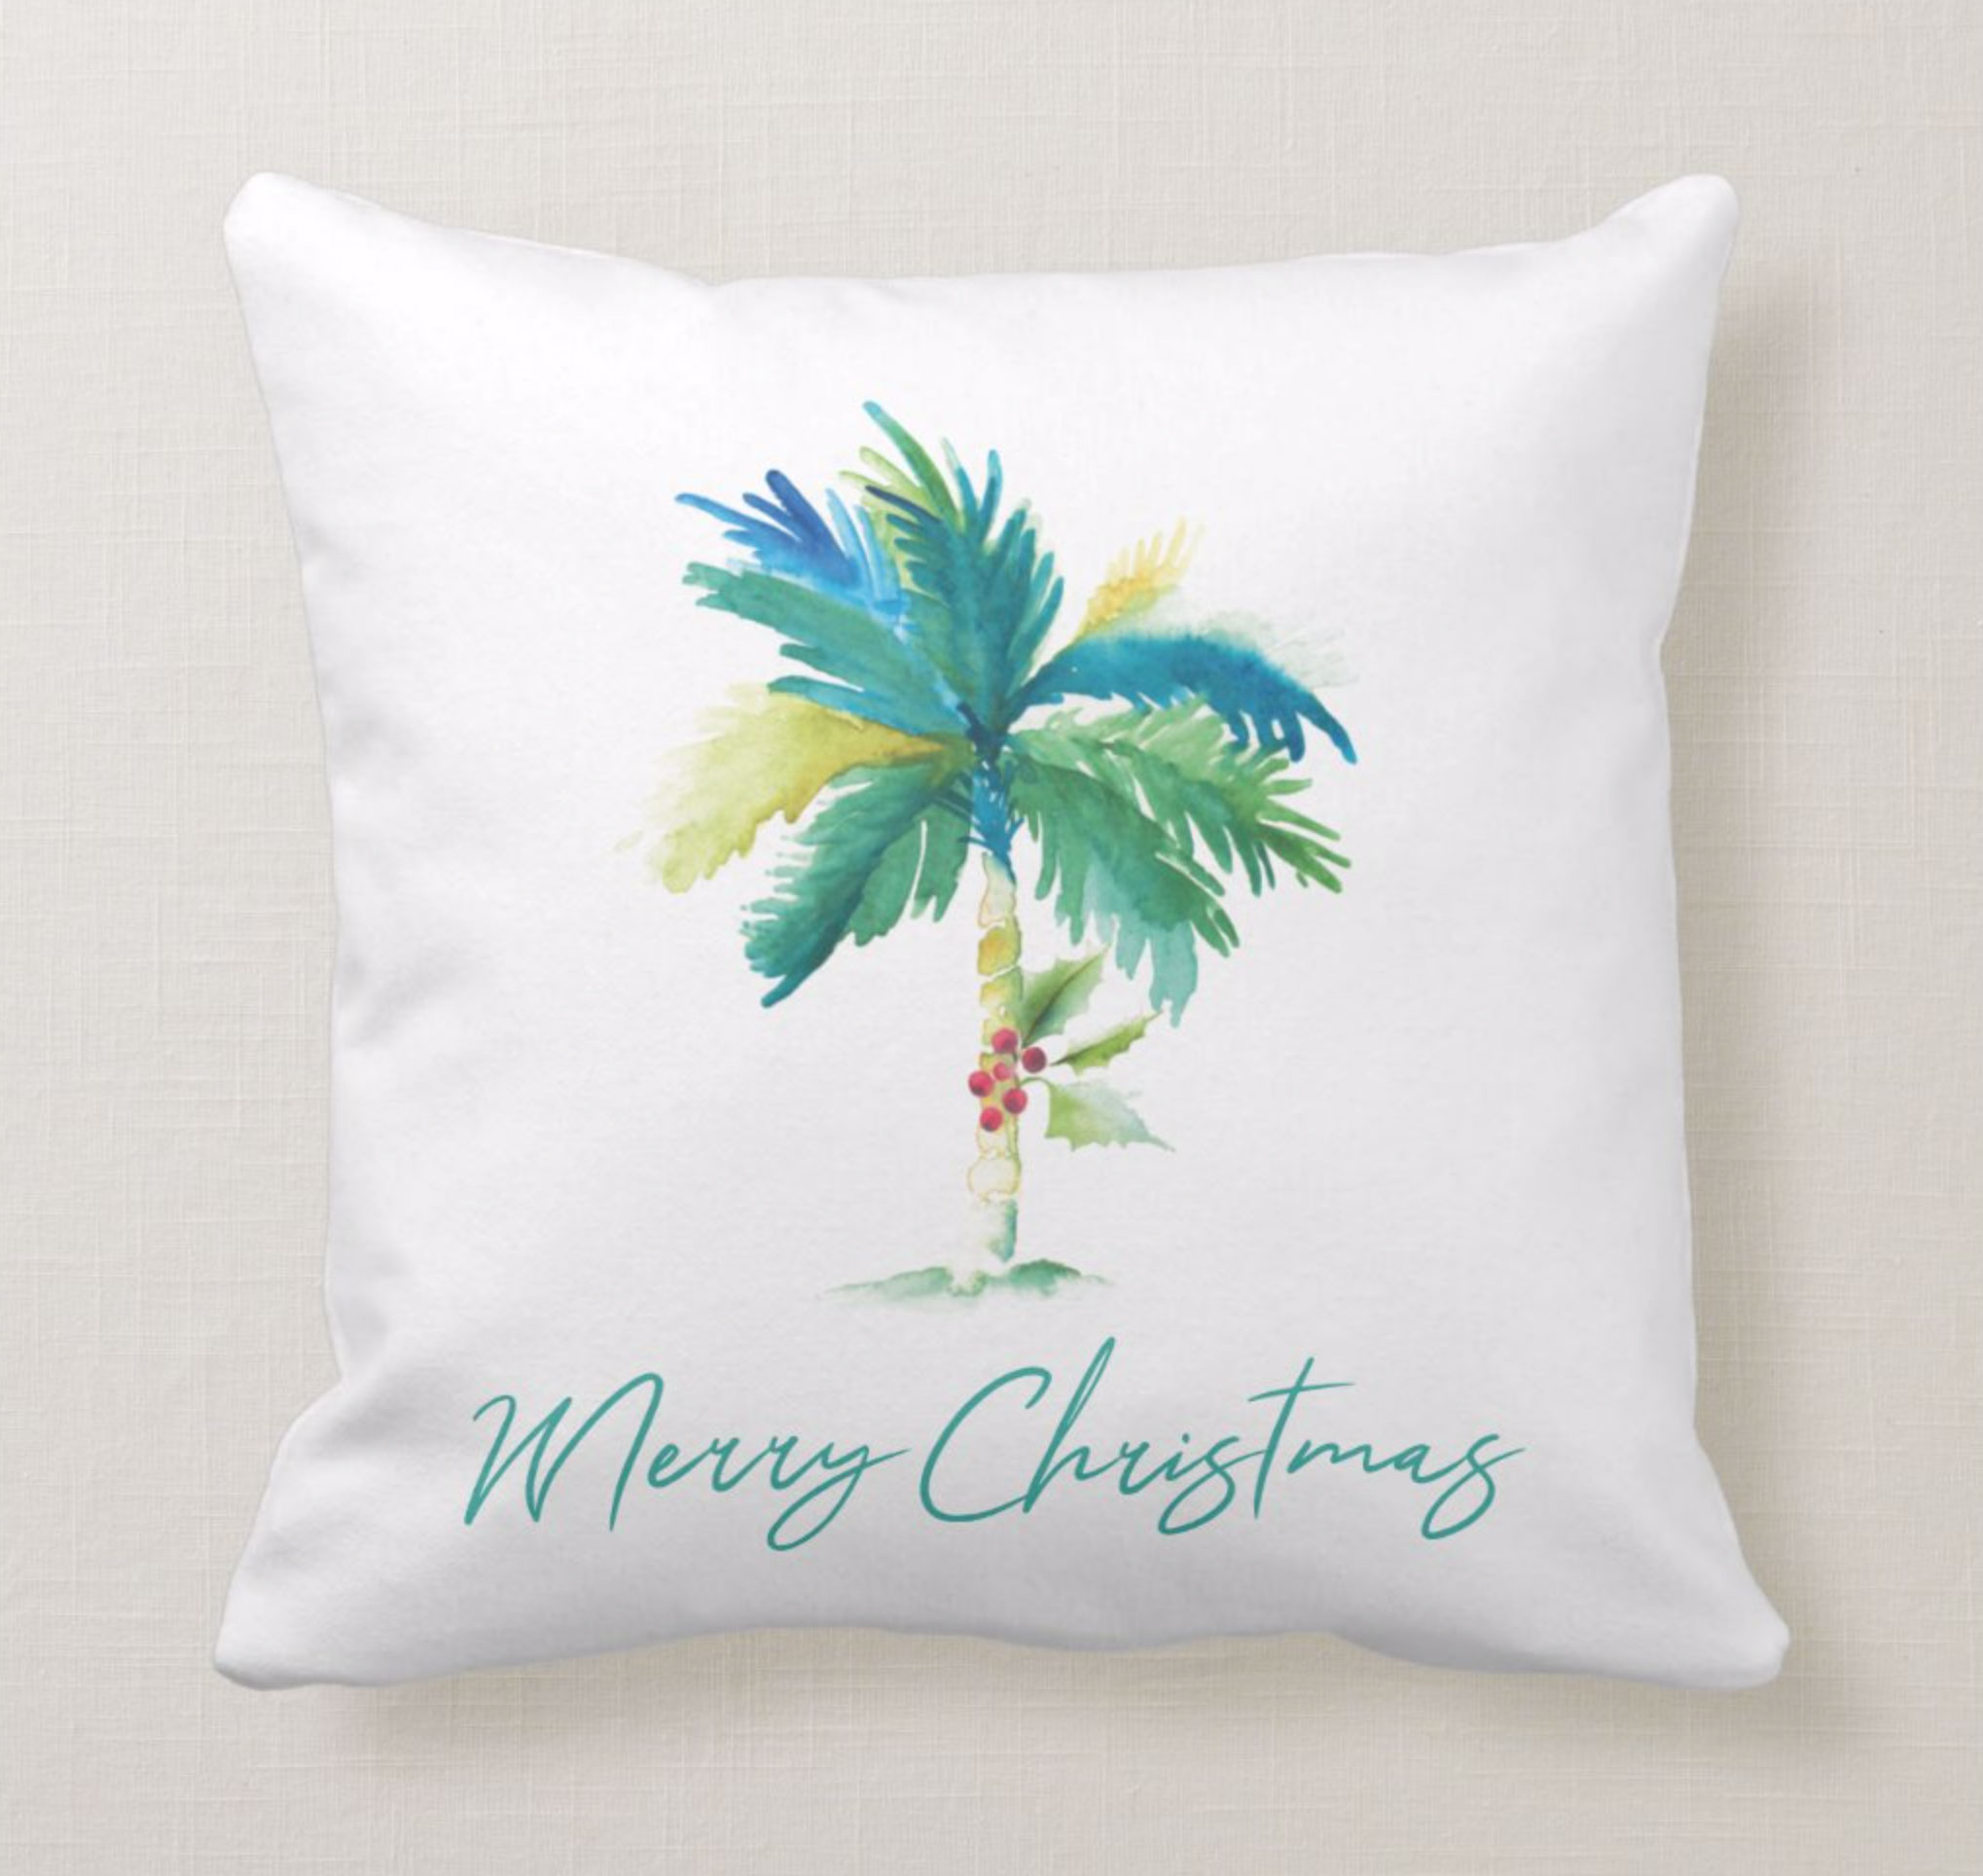 Coastal Christmas Decor Palm Tree Throw Pillow design by Victoria Grigaliunas